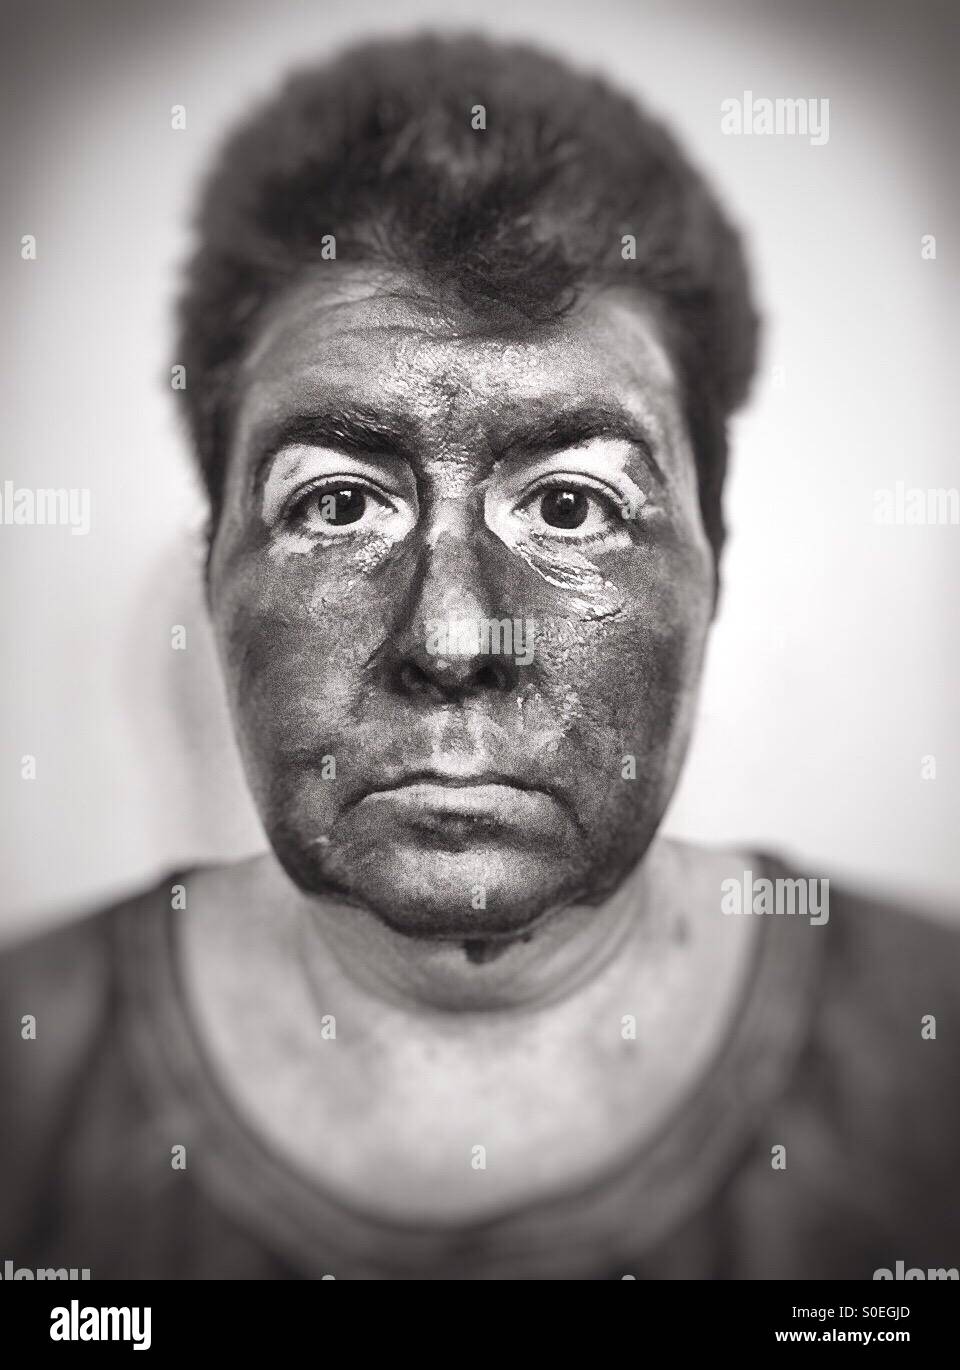 A woman with a mud mask on poses like a mug shot - black and white Stock Photo